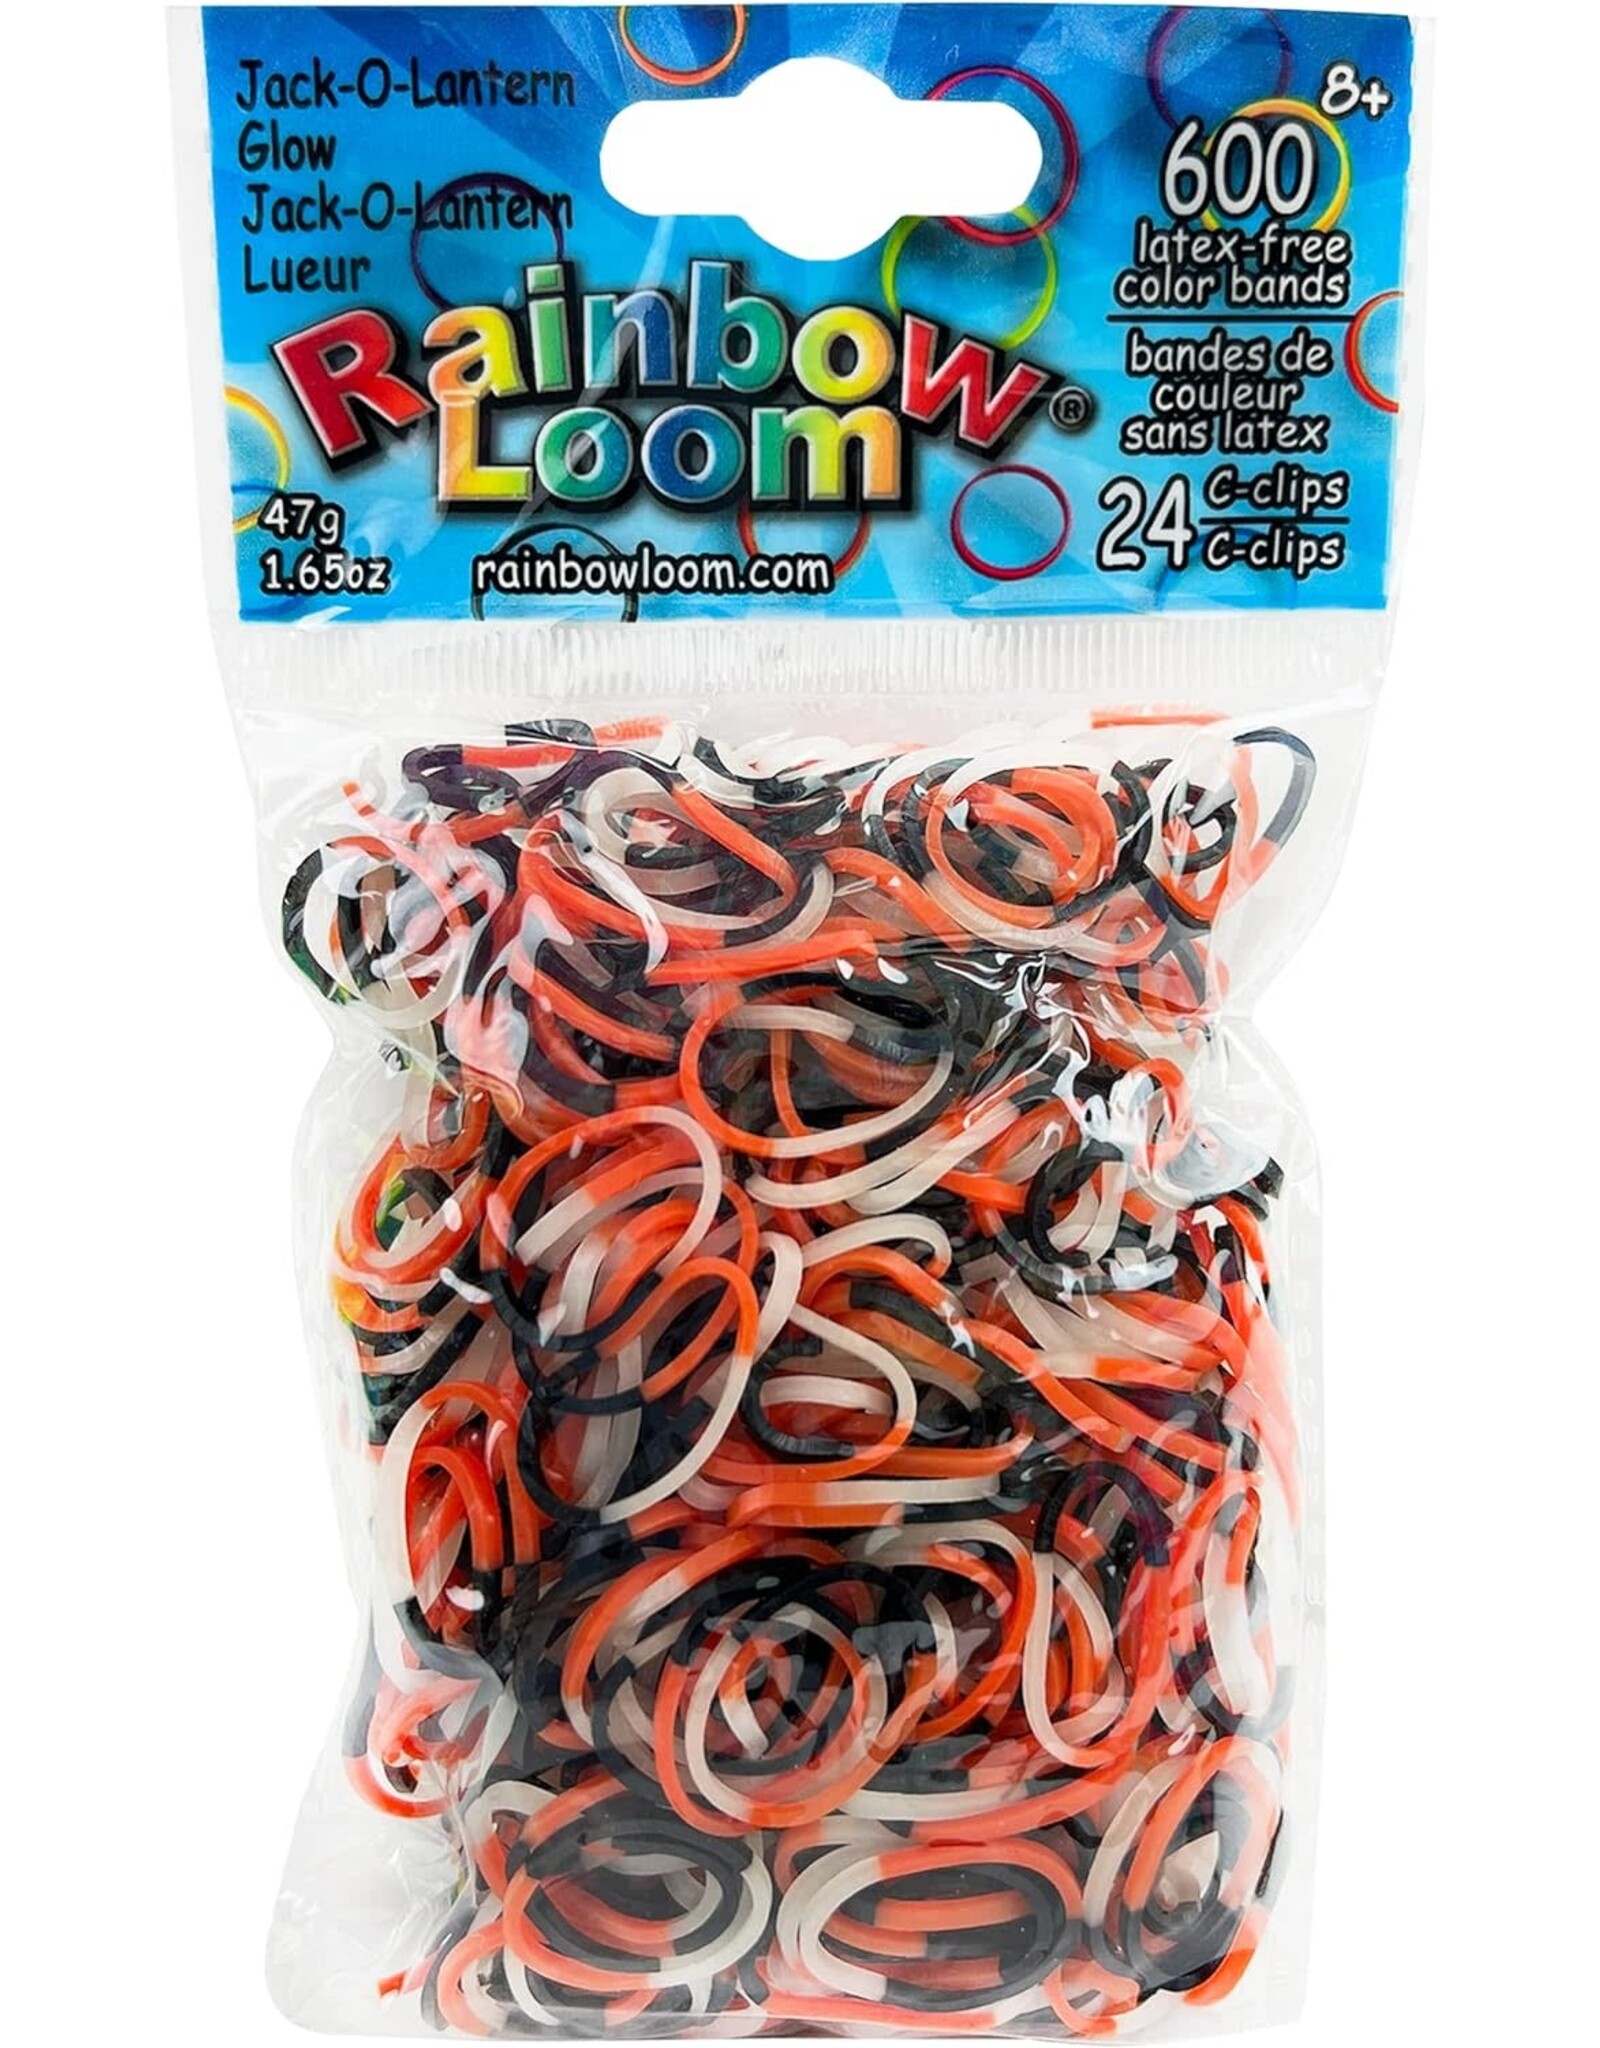 Rainbow Loom Refill Bands: Spooky Jack-O-Lantern